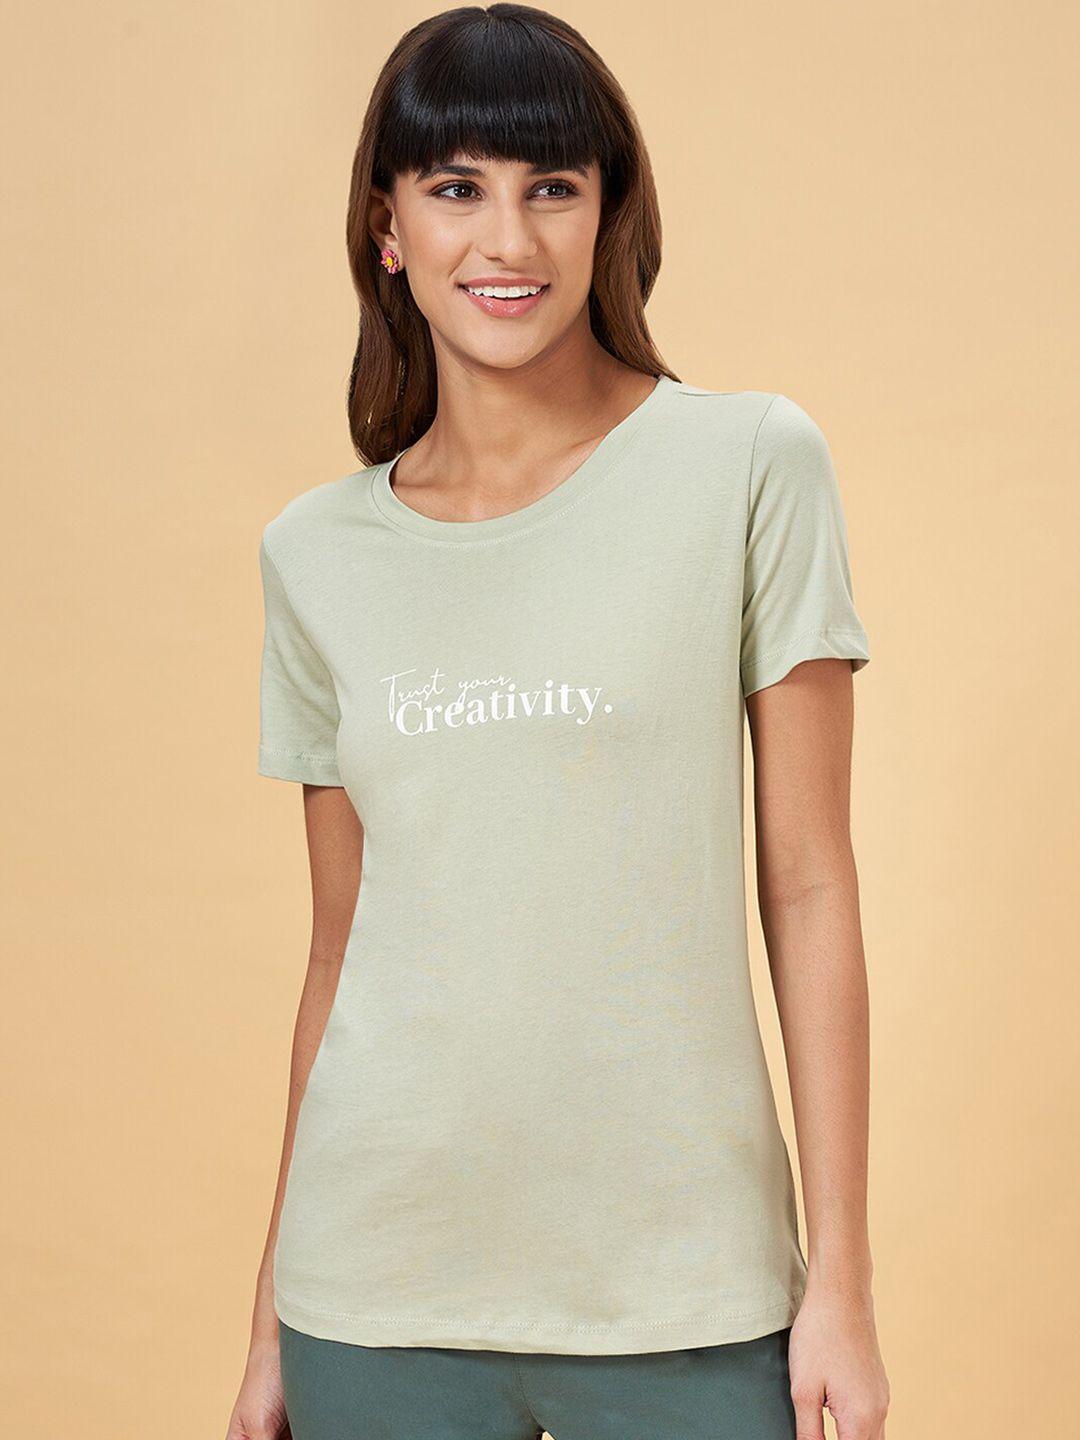 honey-by-pantaloons-women-typography-t-shirt